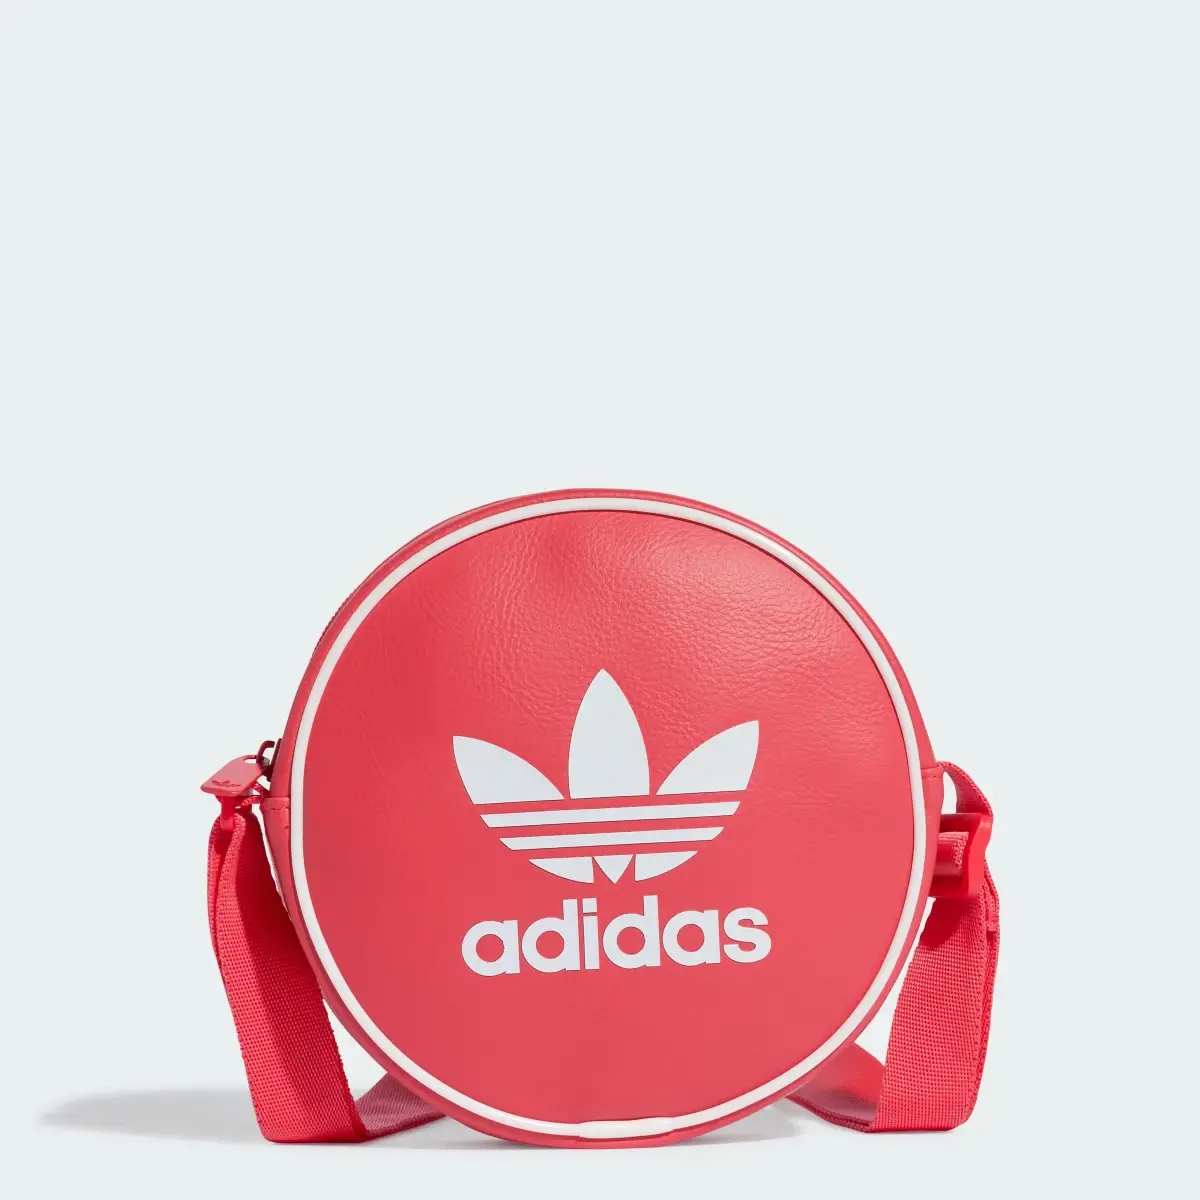 Adidas AC ROUND BAG. 1